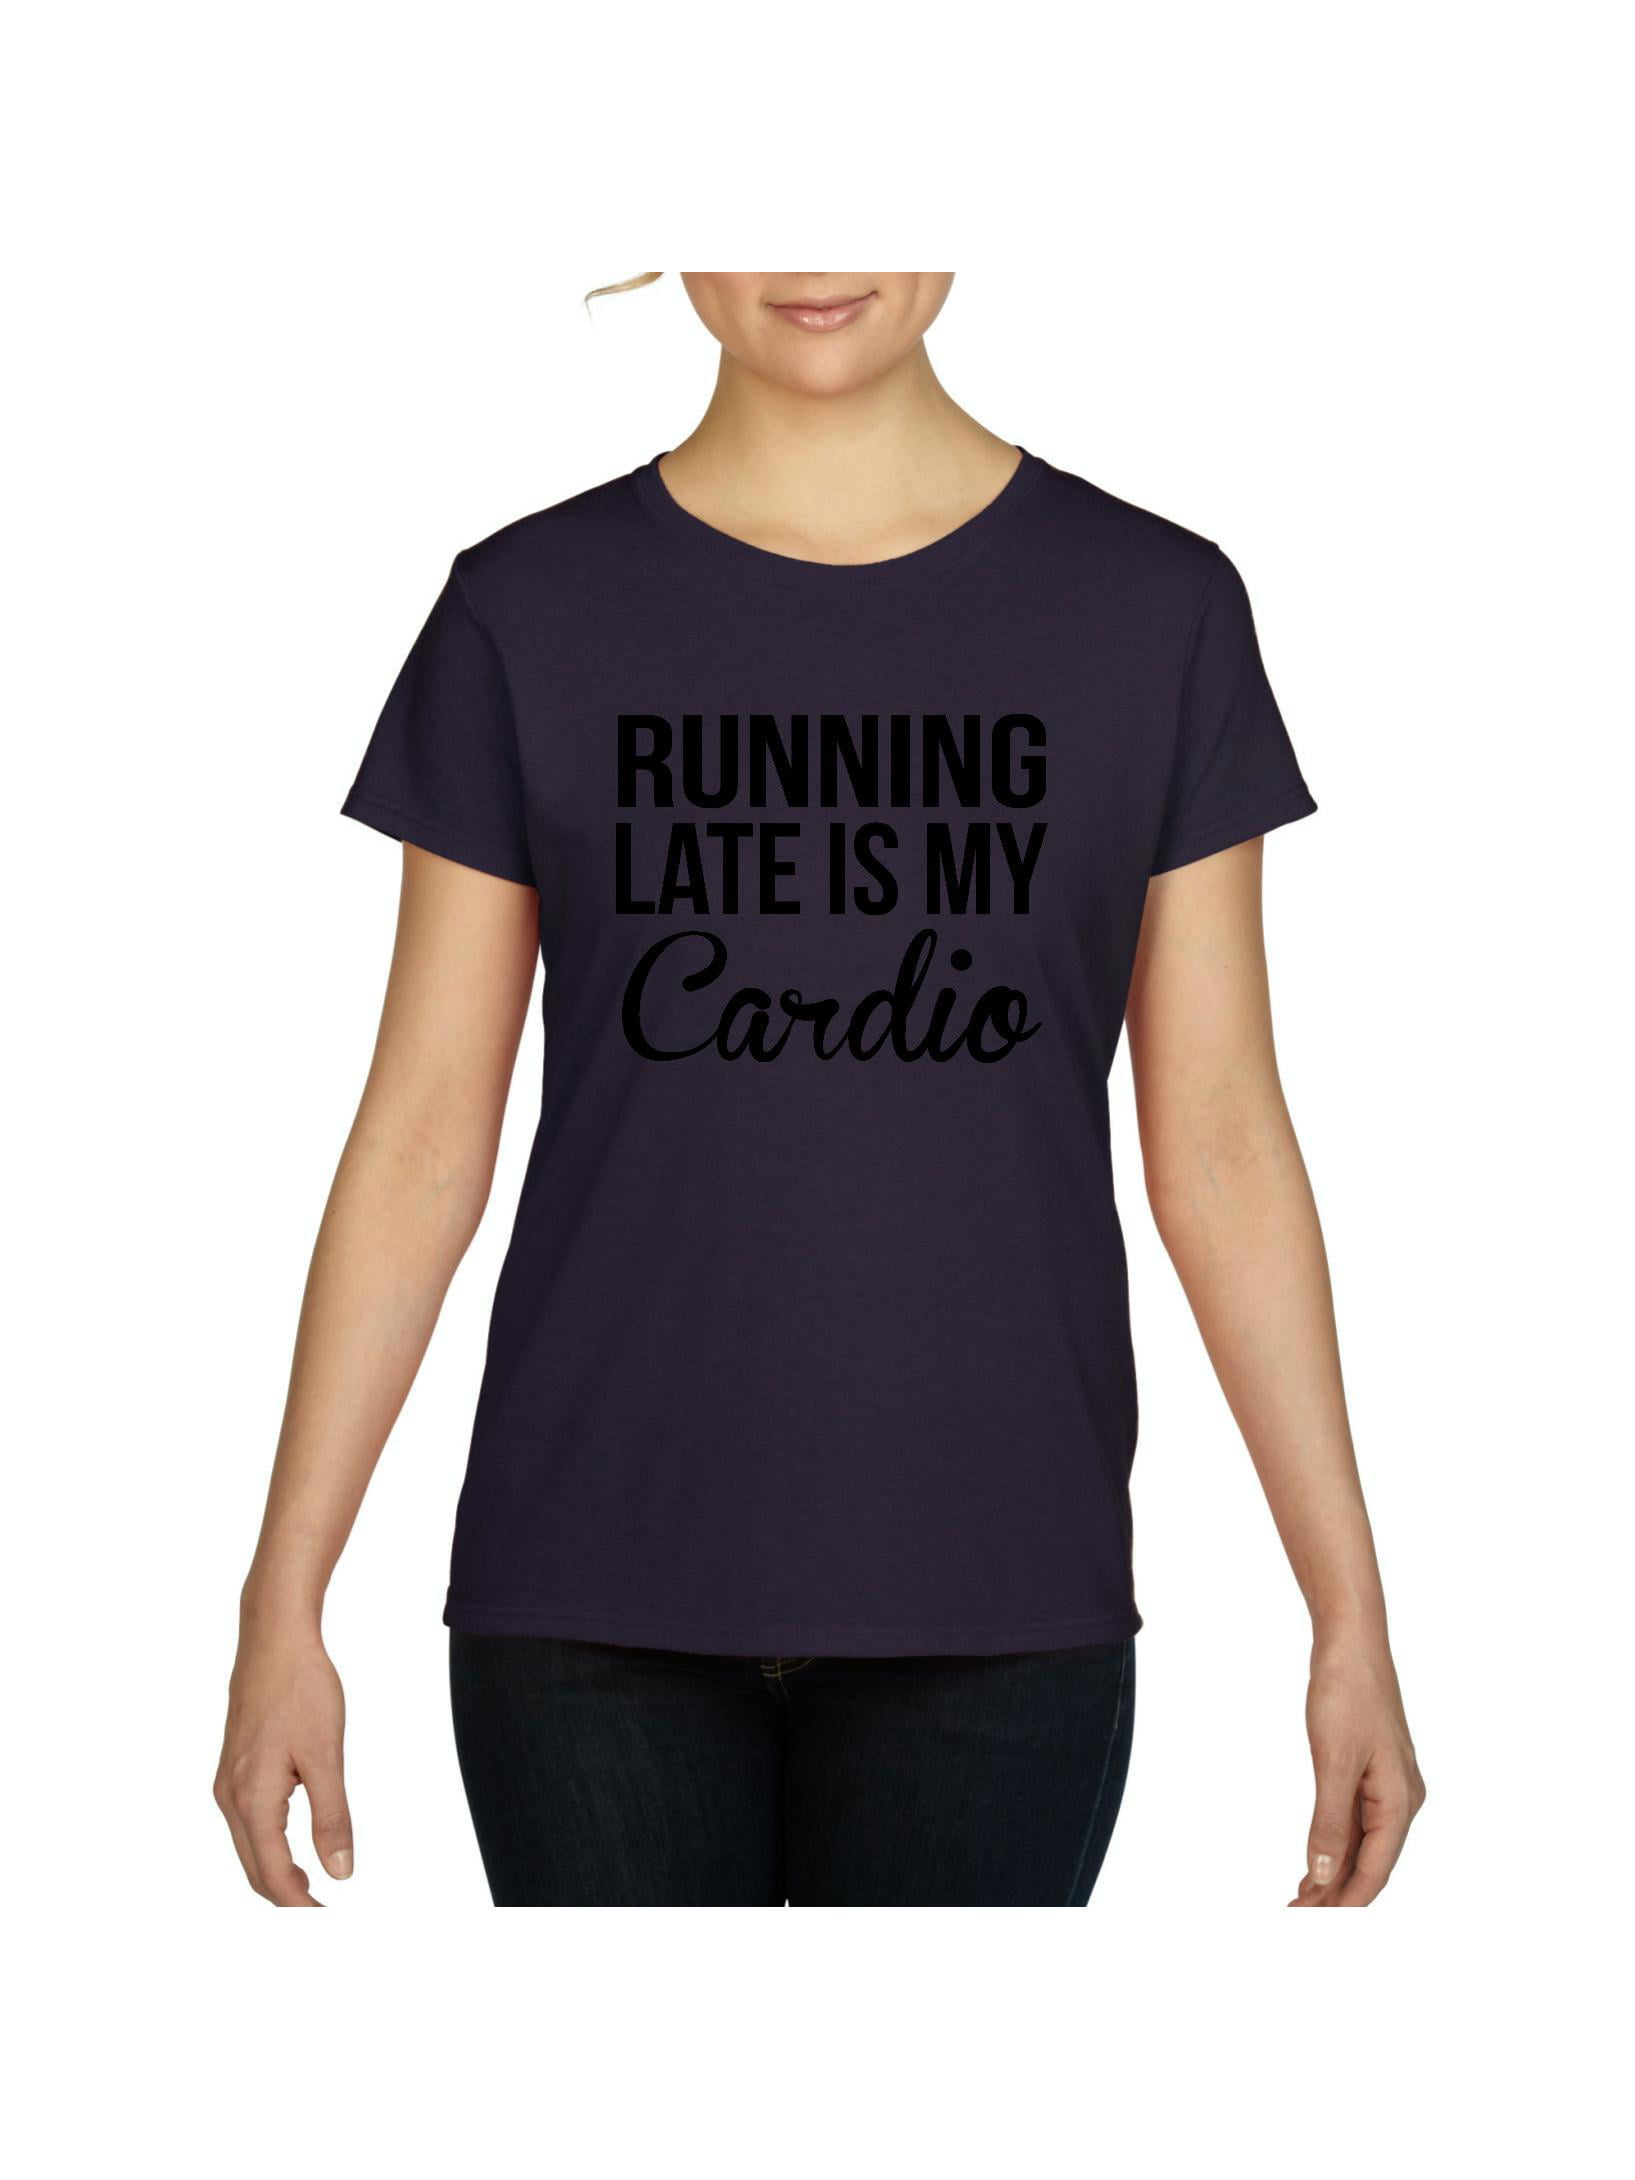 Running Is My Cardio Running Tops T-Shirt Funny Novelty Womens tee TShirt 